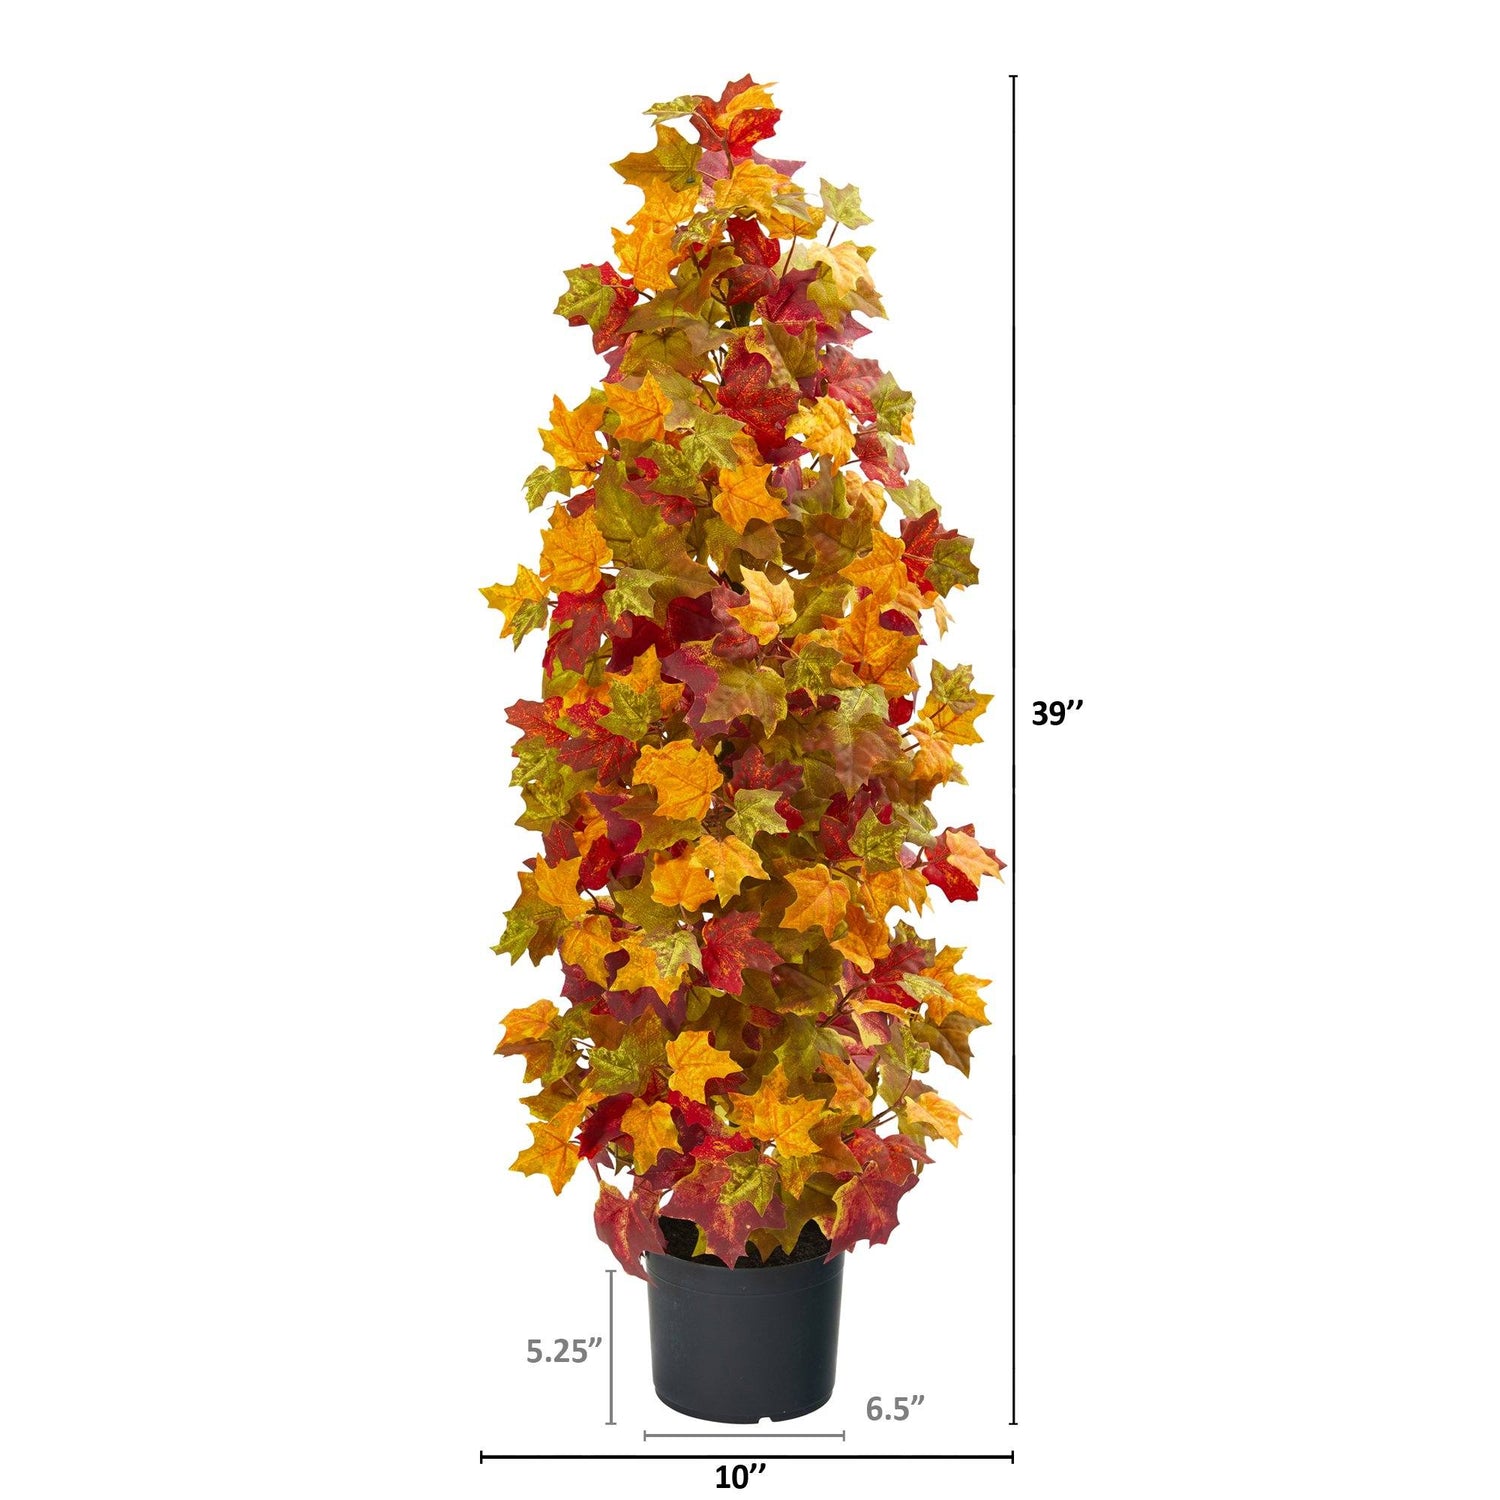 39” Autumn Maple Artificial Tree